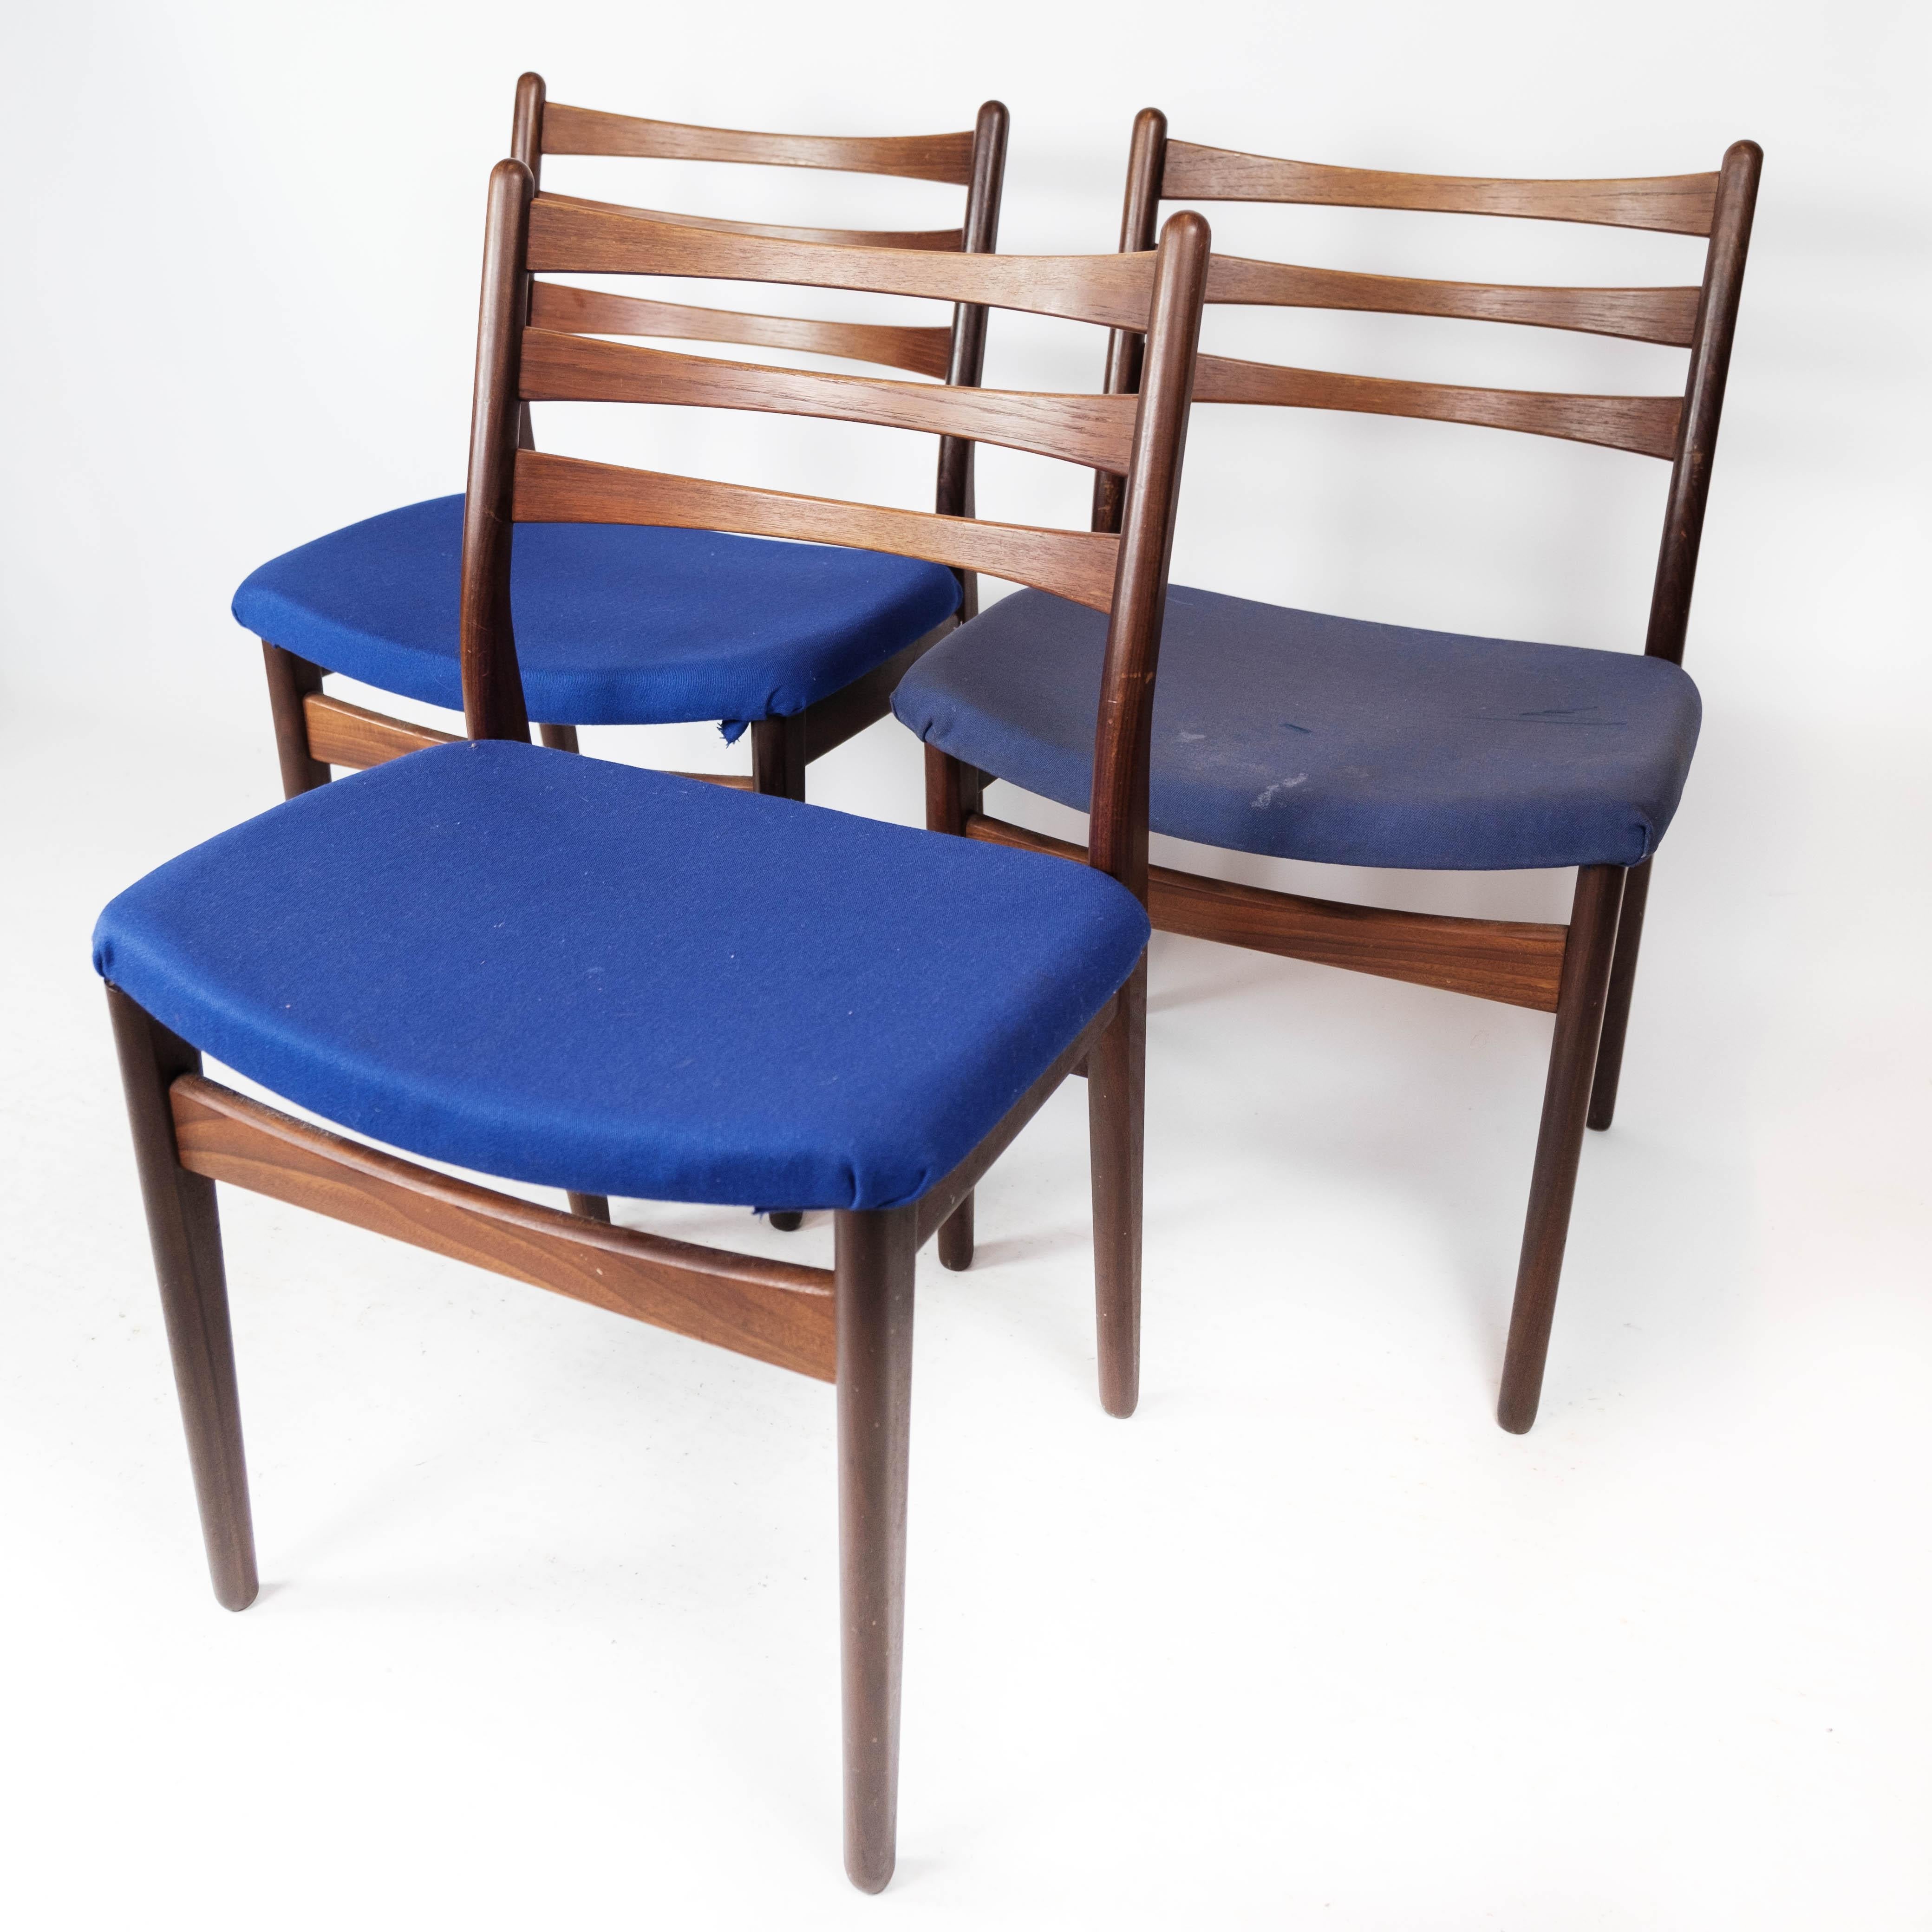 Scandinavian Modern Set of Three Dining Room Chairs in Teak of Danish Design, 1960s